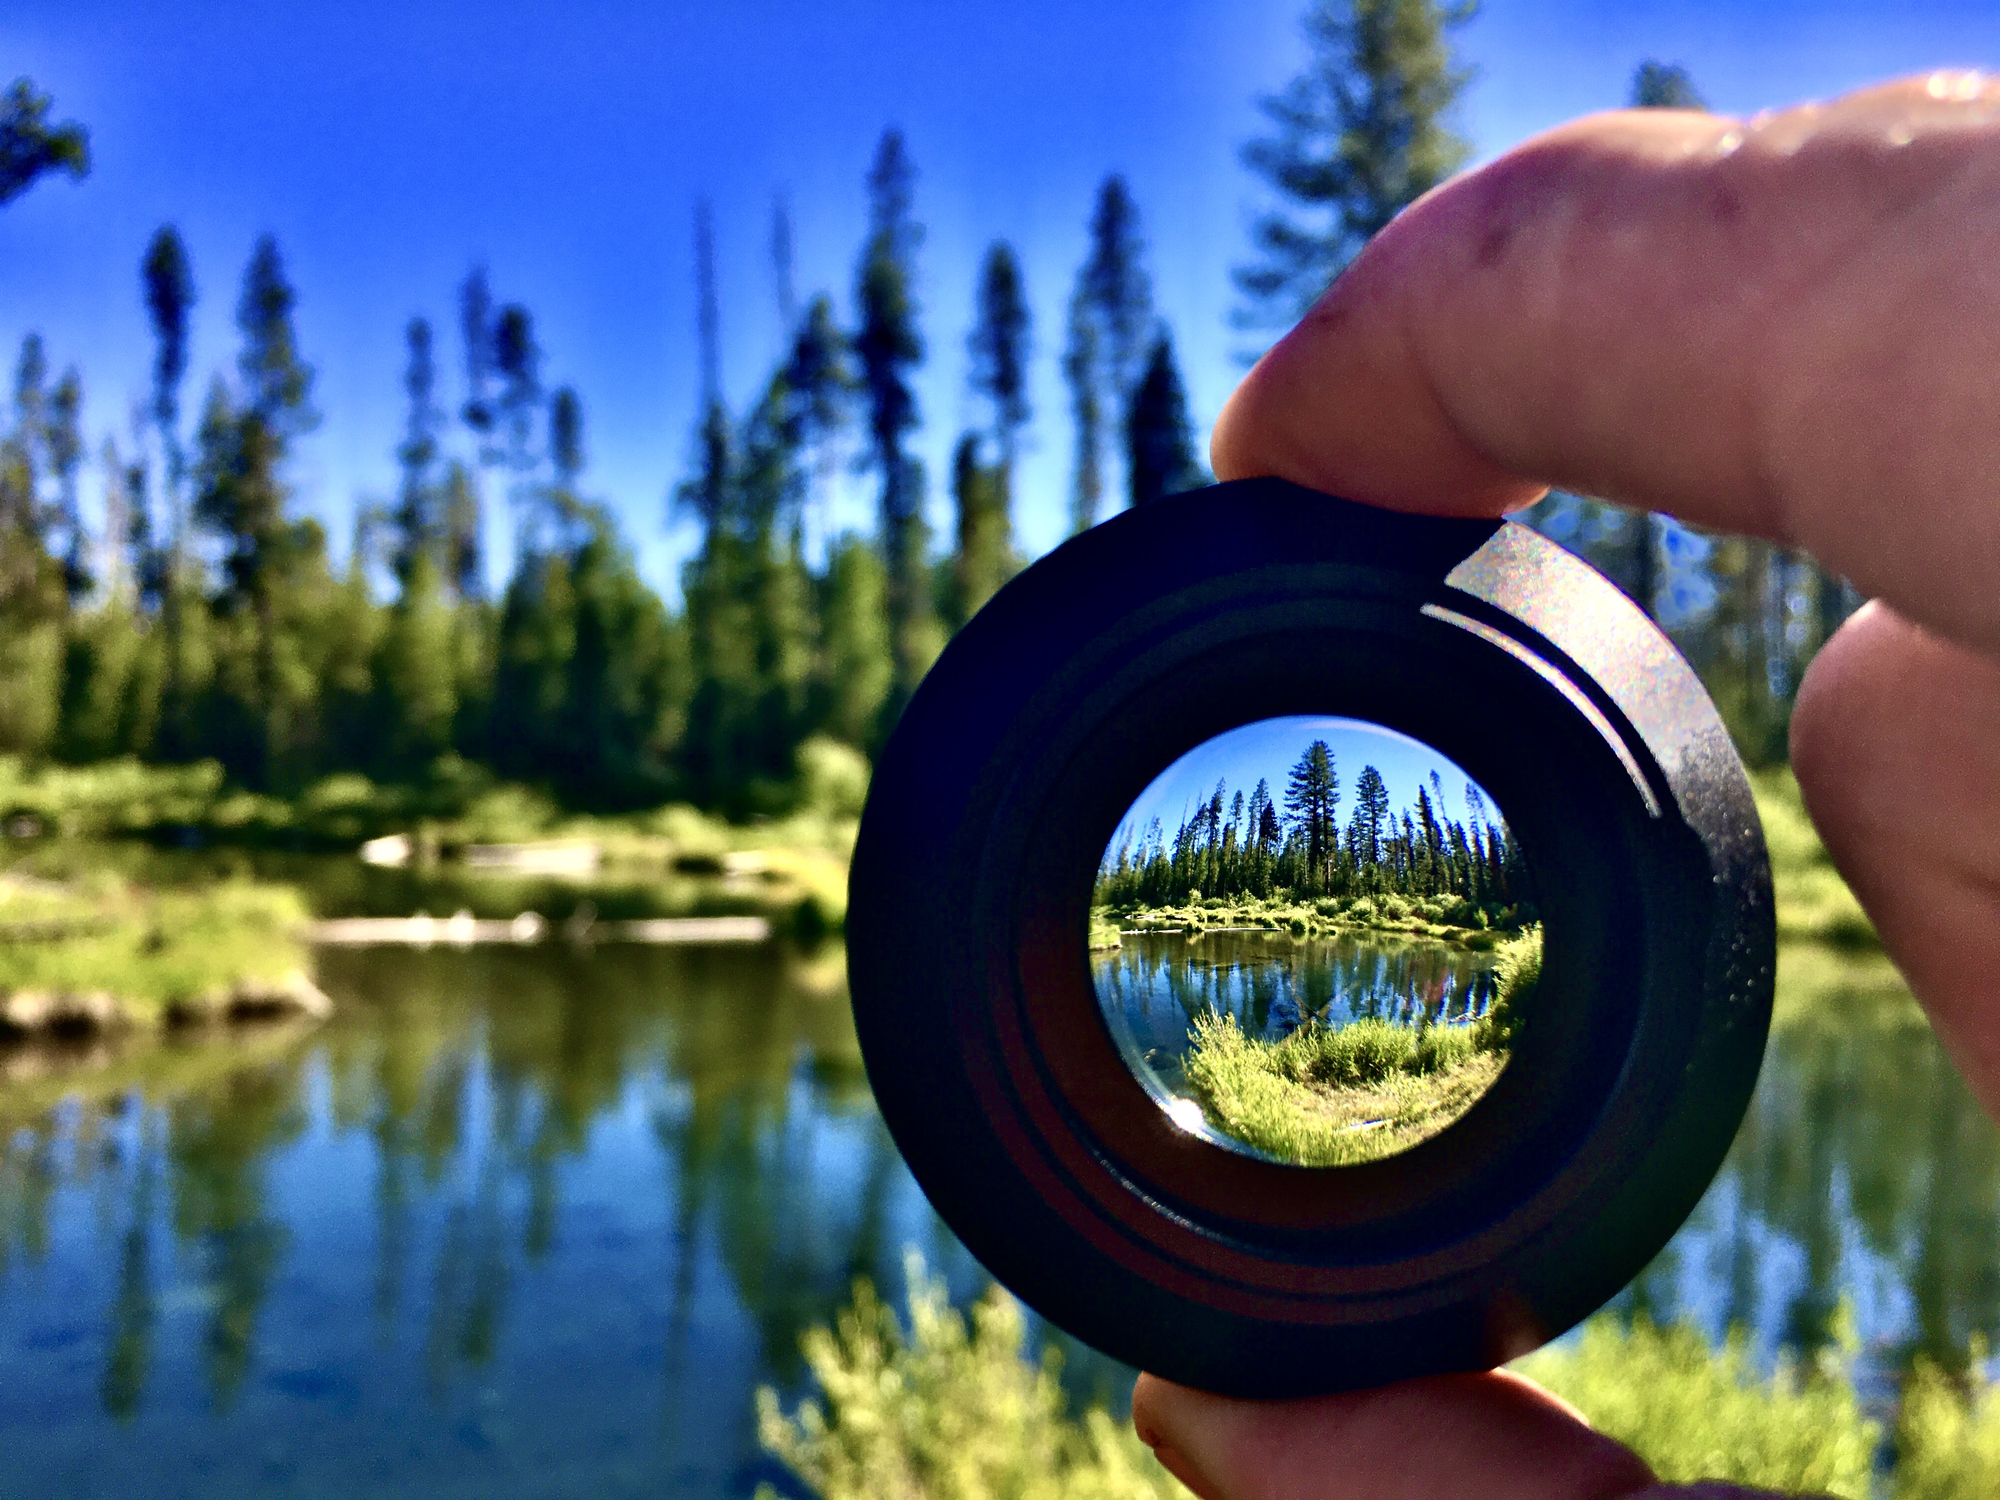 Looking through a lens